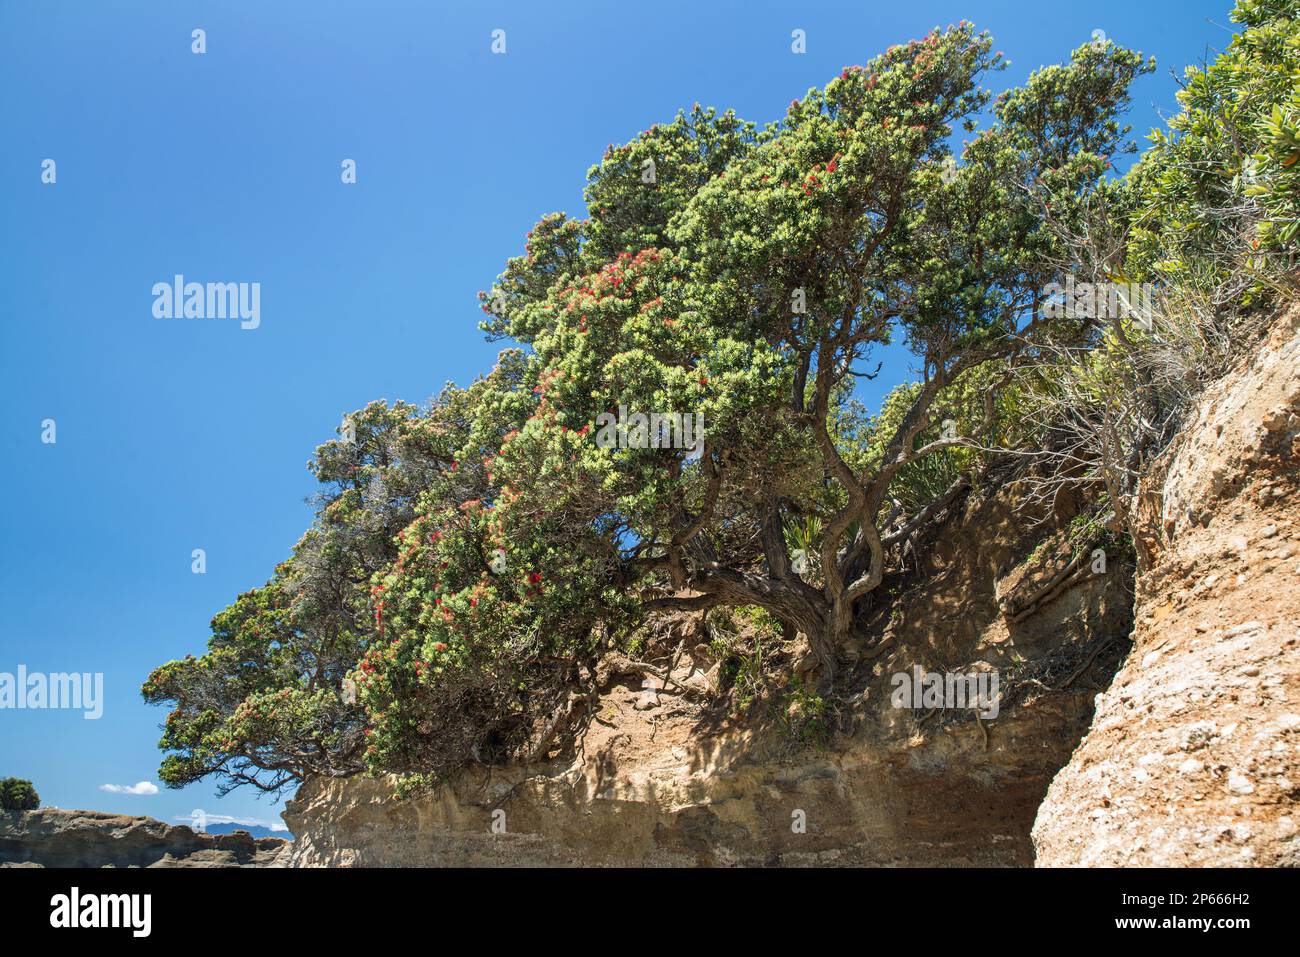 Pohutukawa tree (Metrosideros excelsa), also referred to as the New Zealand Christmas tree;  clinging onto rocky cliffs in Anchor Bay, Tawharanui Regi Stock Photo